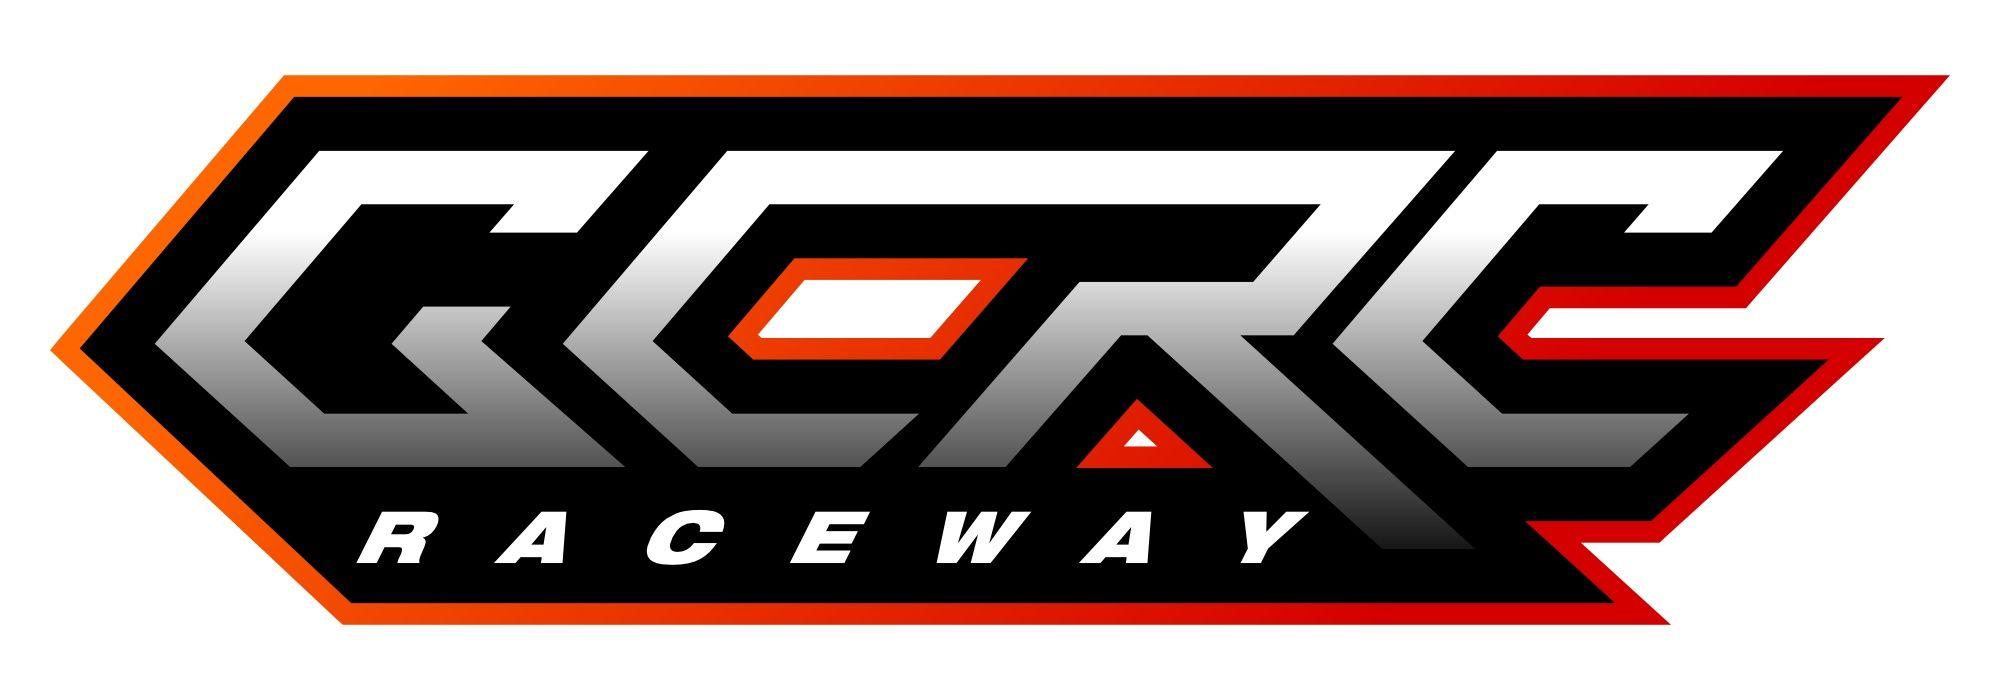 Off-Road Racing Logo - GCRC Raceway Gold Coast Indoor Off Road Racing - R/C Tech Forums